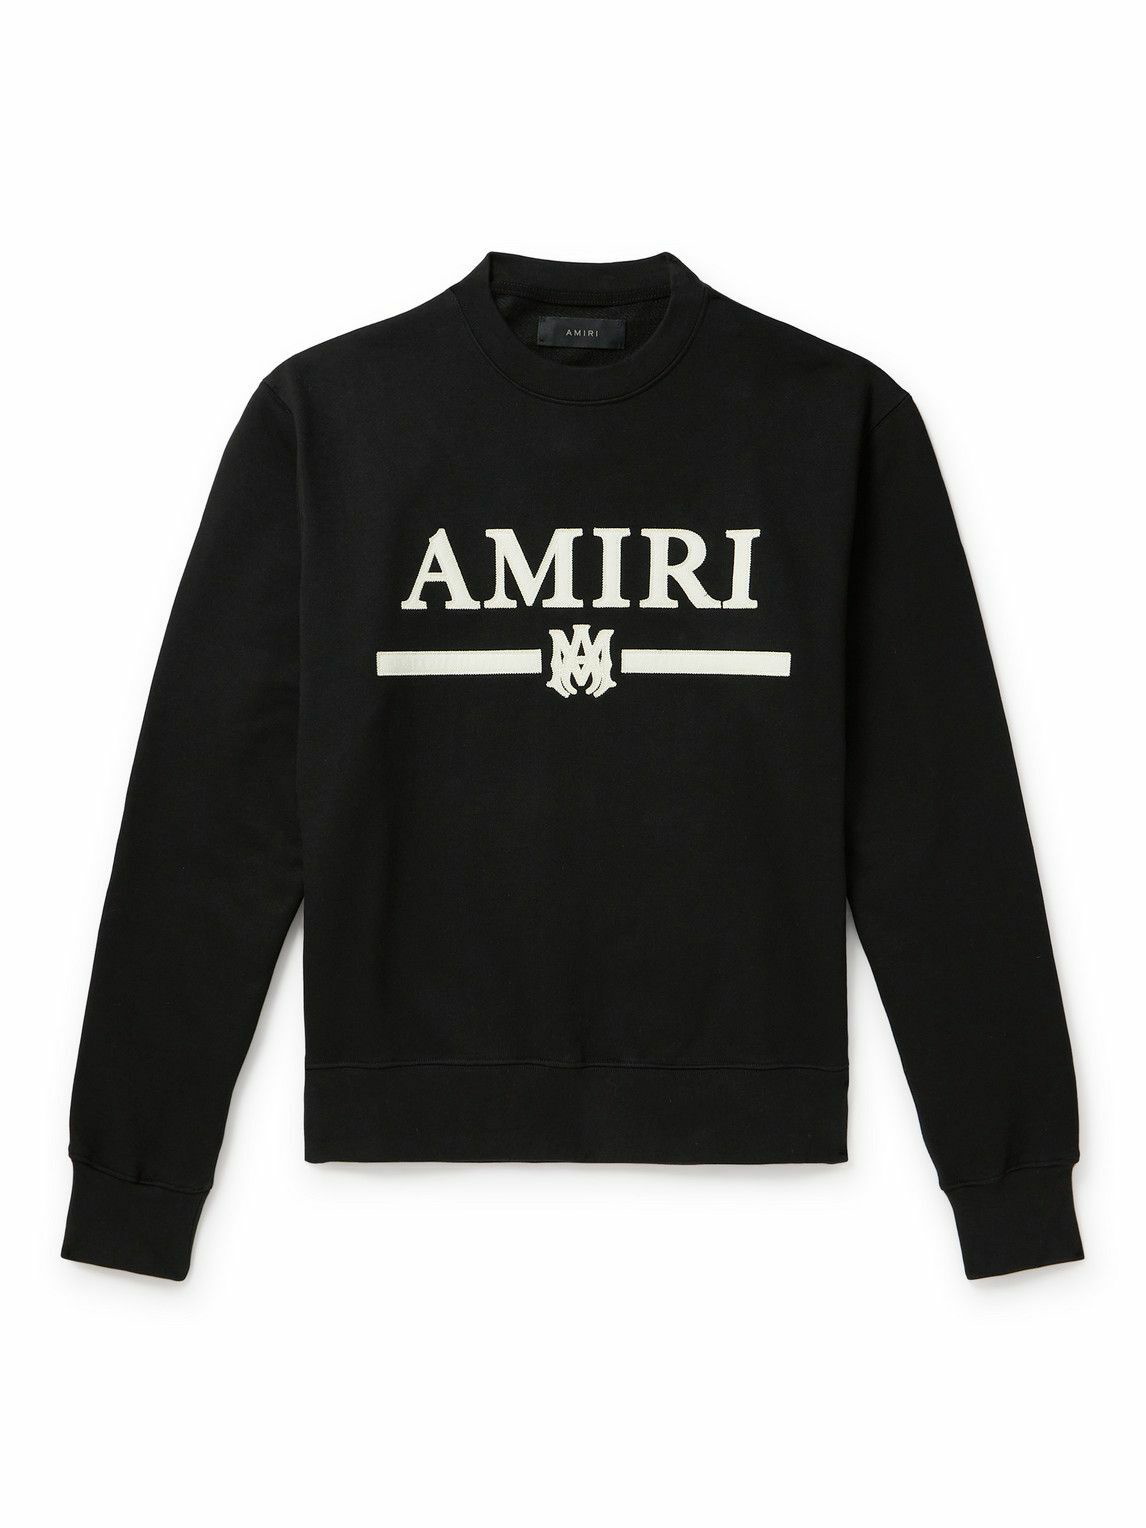 AMIRI - Logo-Appliquéd Cotton-Jersey Sweatshirt - Black Amiri